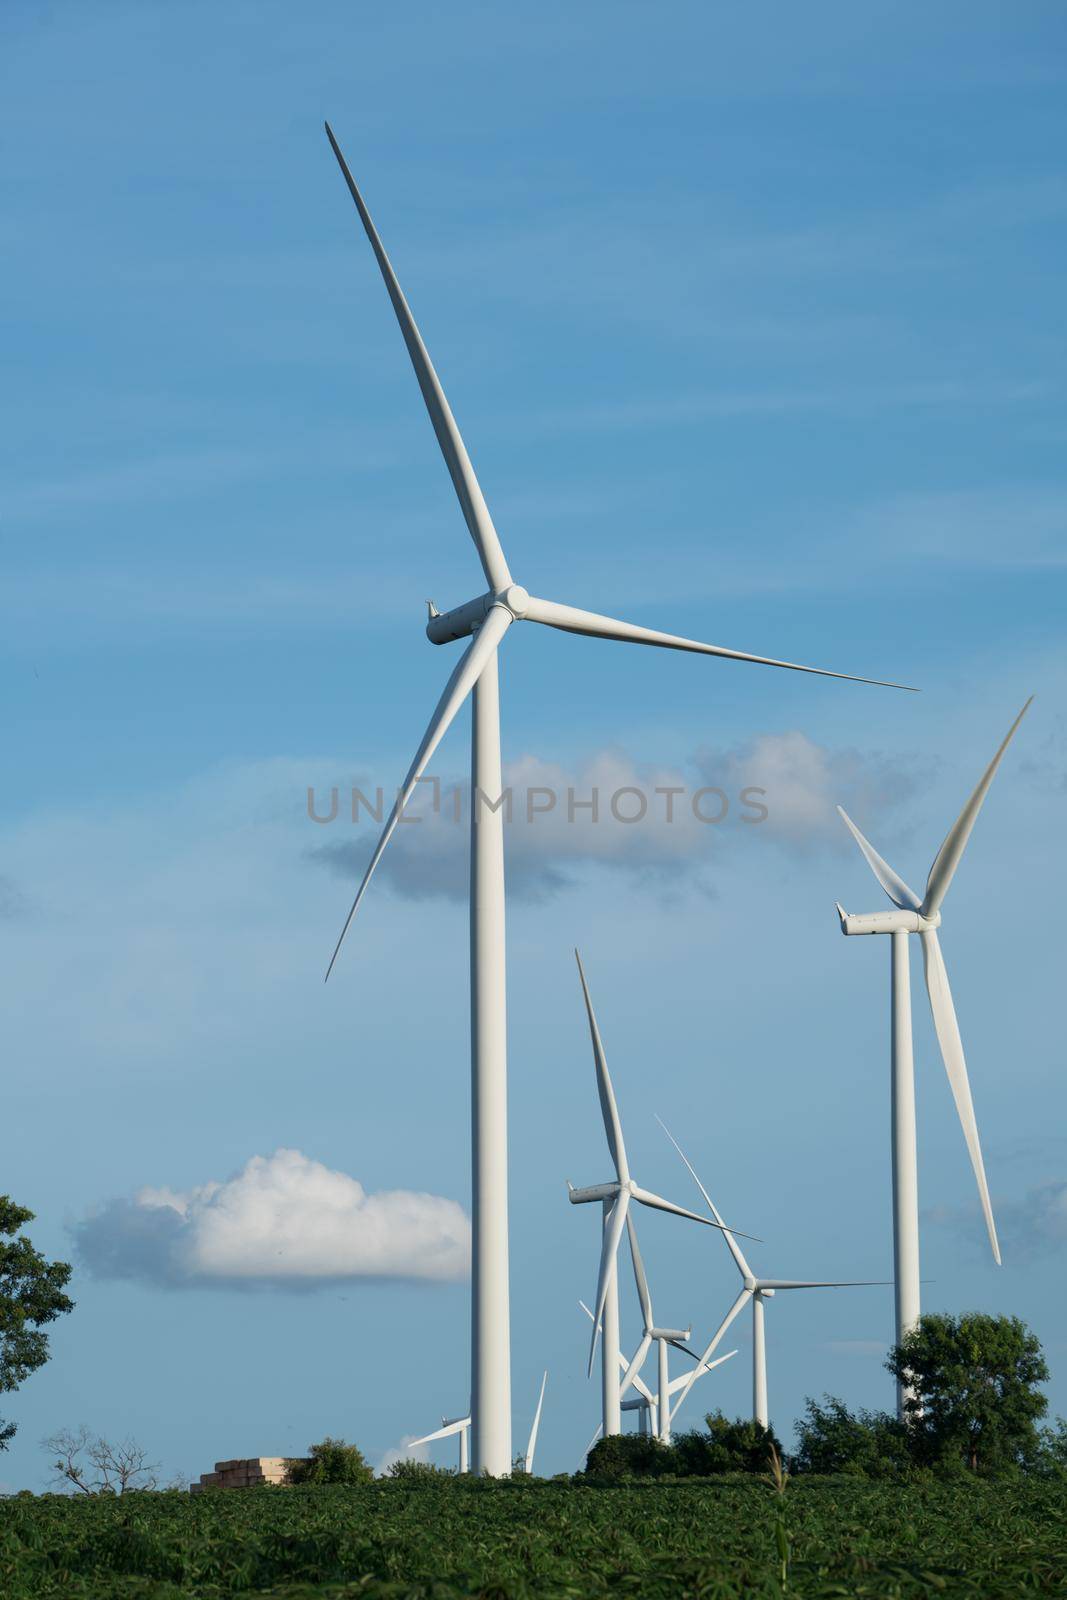 Wind turbine farm - renewable energy, sustainable energy and alternative energy